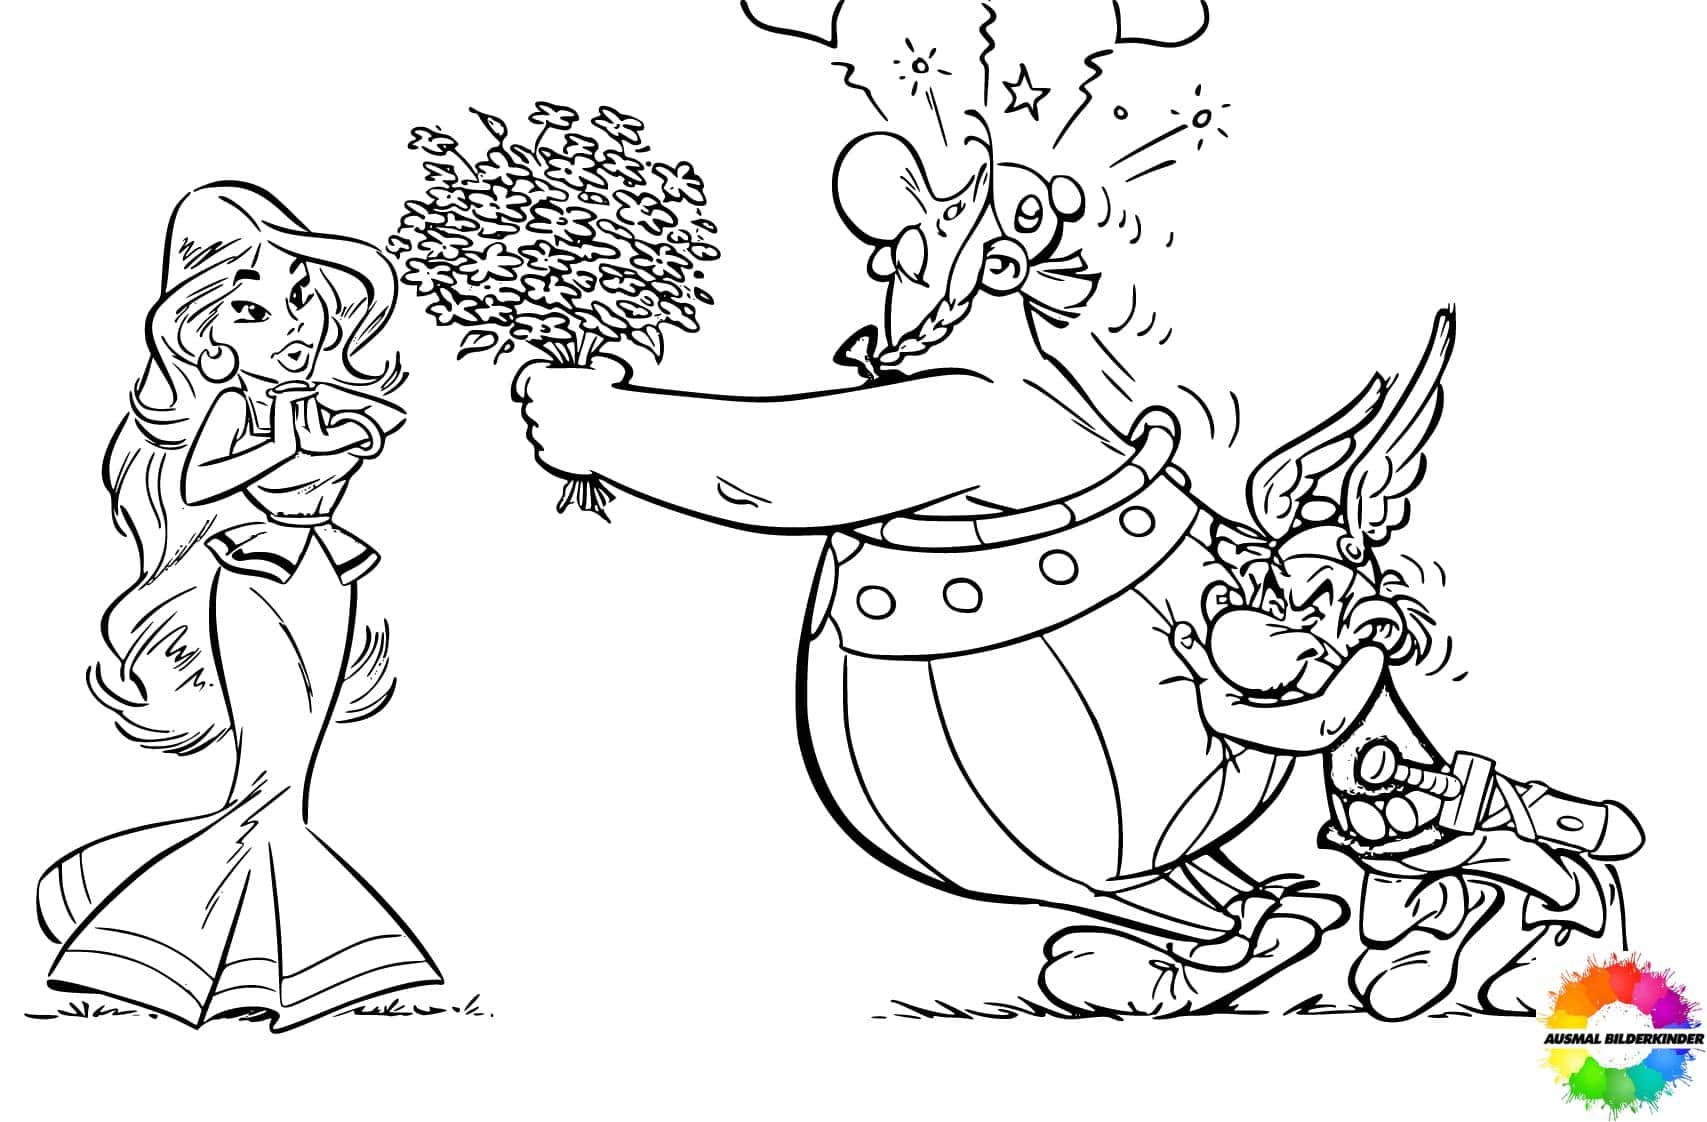 Asterix-and-Obelix-Ausmalbilder-ausmalbilderkinder-de-29